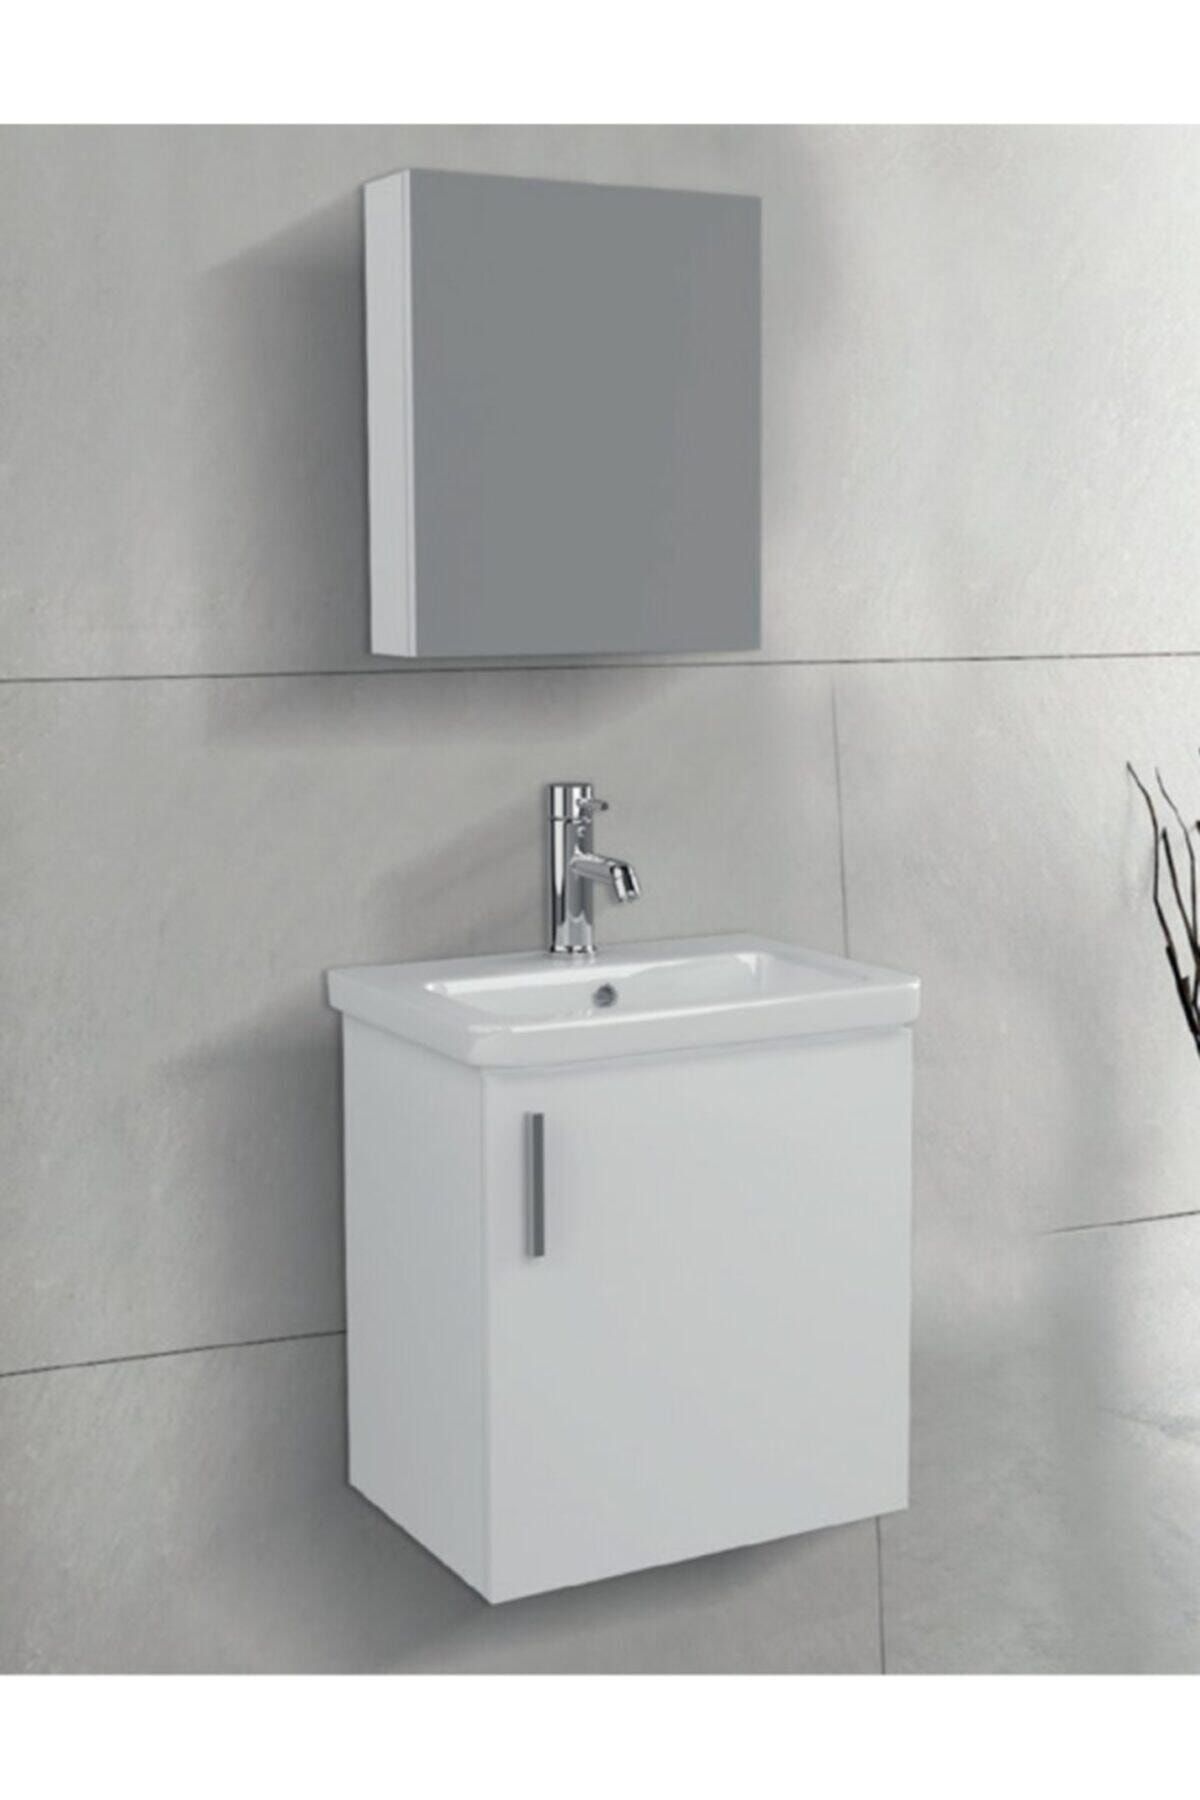 Ece Banyo Slim Smart 50 Cm Banyo Dolabı - Parlak Beyaz